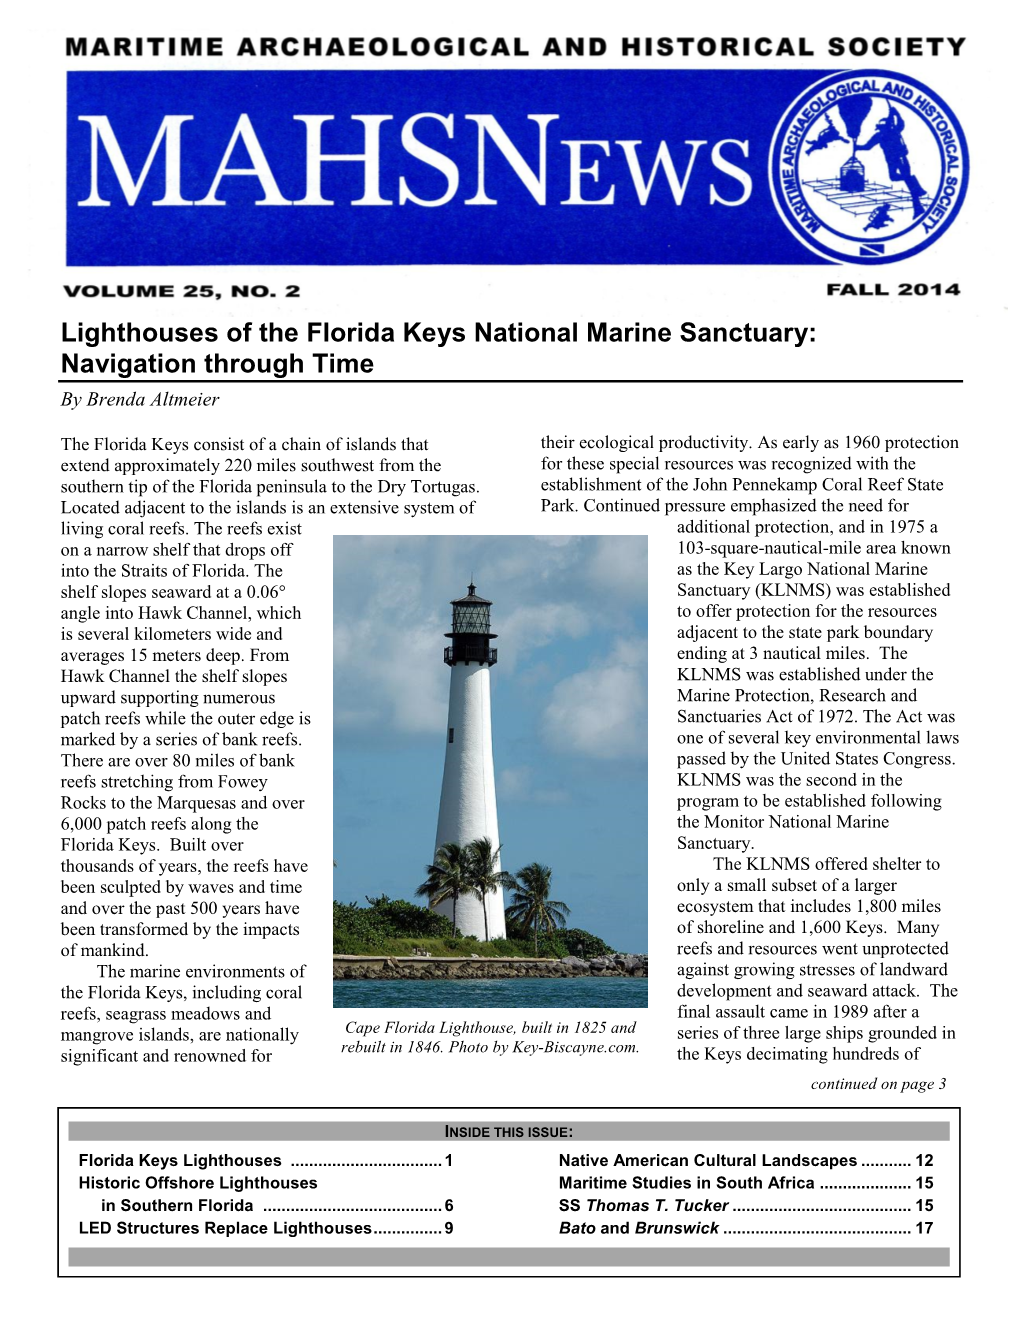 MAHS Pickles Reef Survey, Florida Keys National Marine Sanctuary